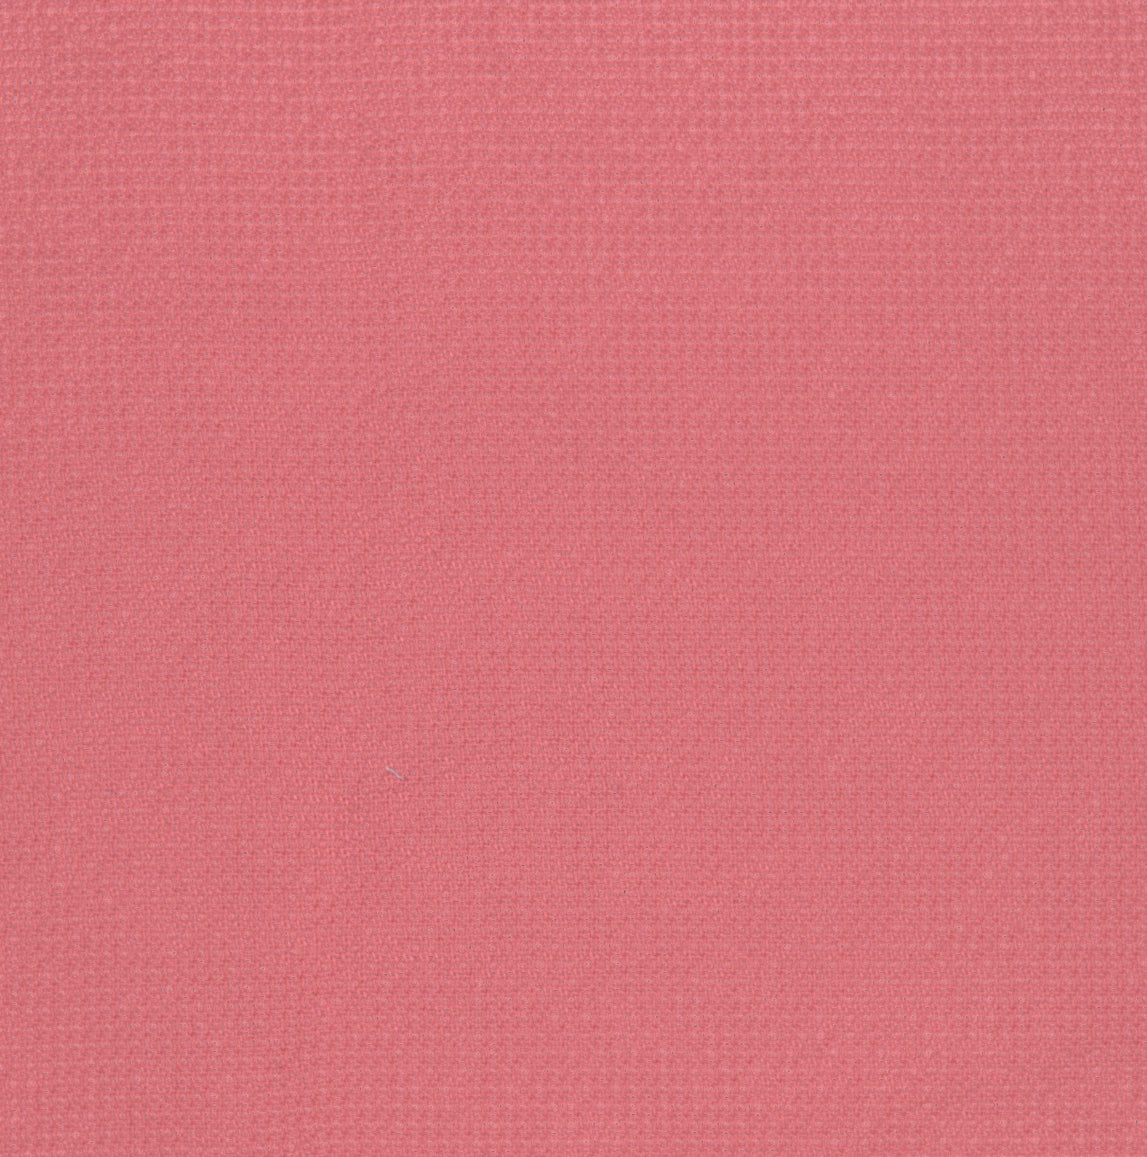 36002-04 Peach Pink Polyester Crepe Plain Dyed 100% 210g/yd 54" pink plain dyed polyester woven Solid Color - knit fabric - woven fabric - fabric company - fabric wholesale - fabric b2b - fabric factory - high quality fabric - hong kong fabric - fabric hk - acetate fabric - cotton fabric - linen fabric - metallic fabric - nylon fabric - polyester fabric - spandex fabric - chun wing hing - cwh hk - fabric worldwide ship - 針織布 - 梳織布 - 布料公司- 布料批發 - 香港布料 - 秦榮興